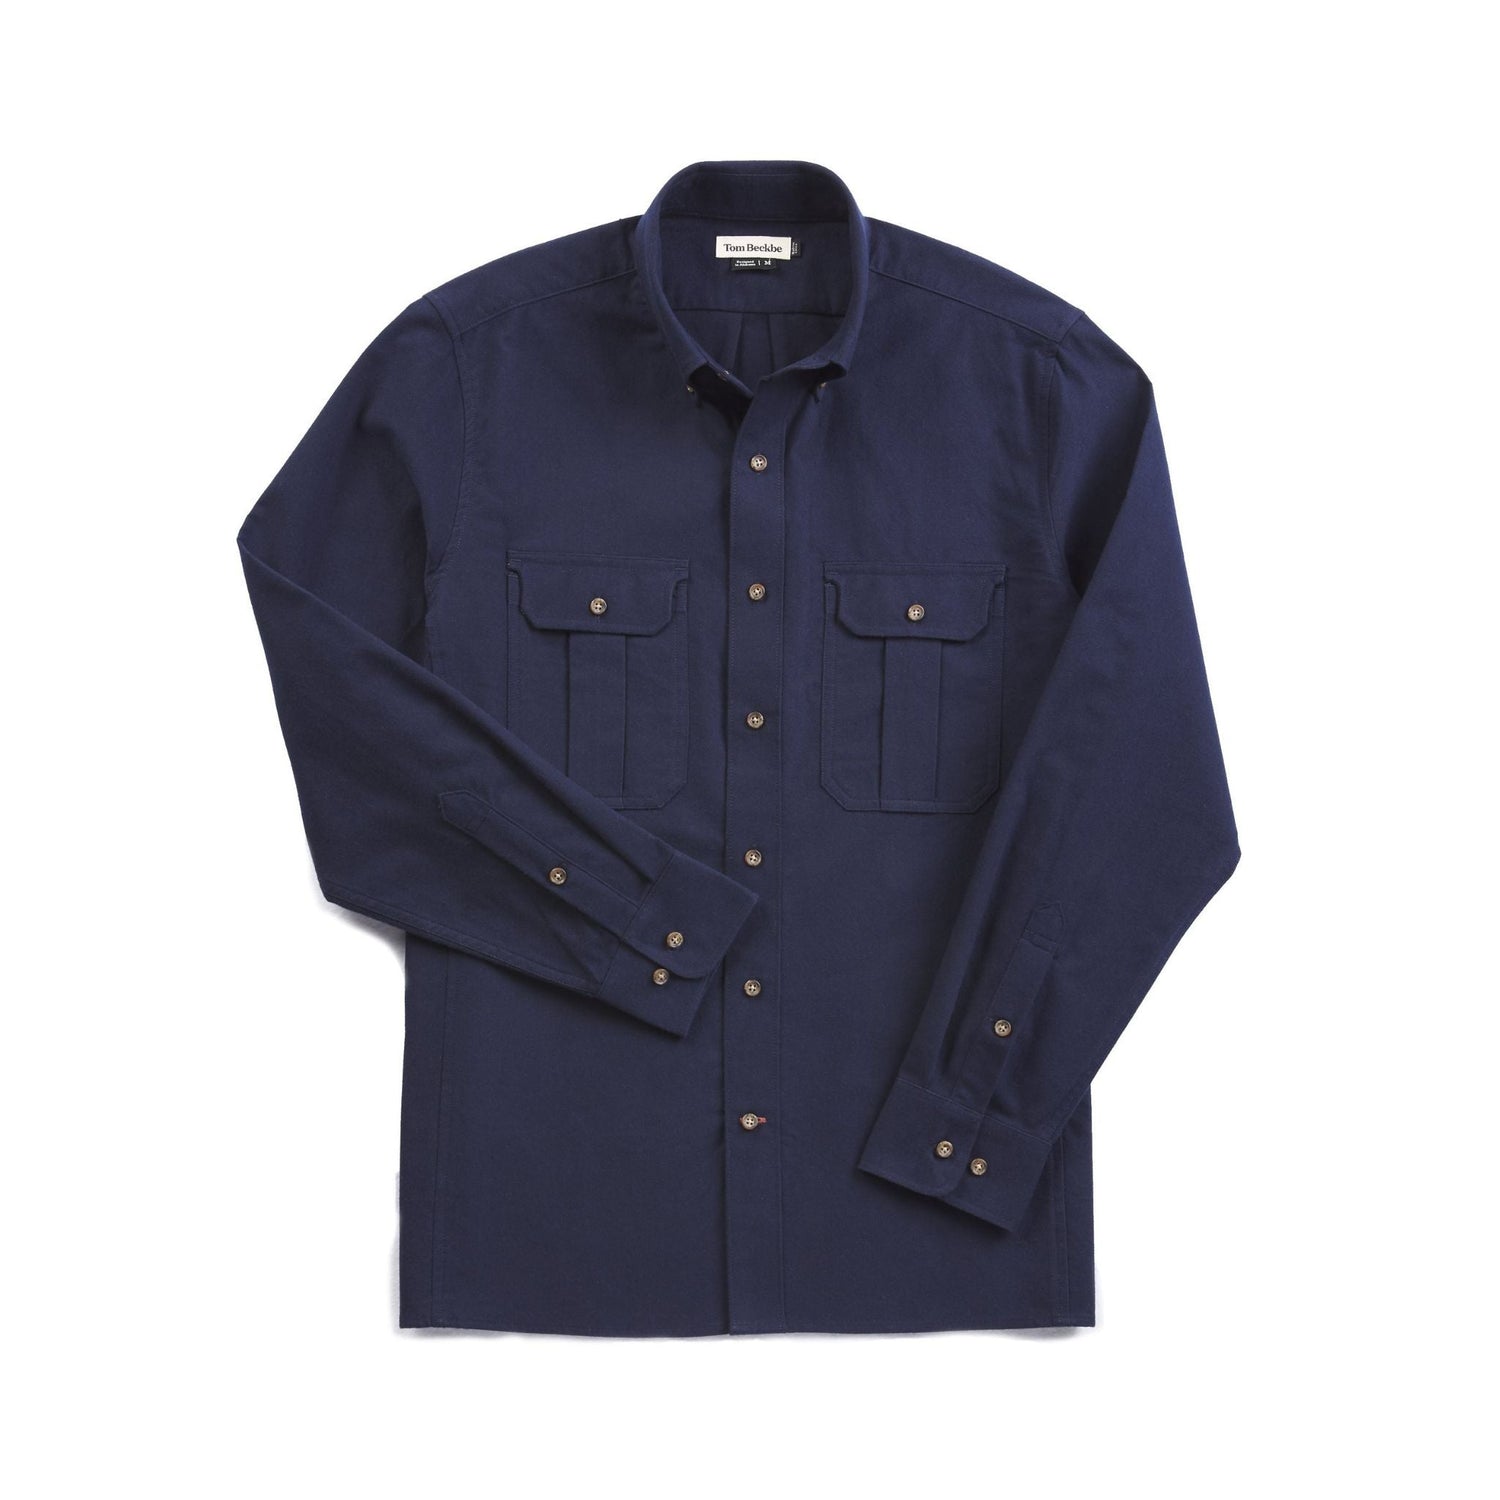 Men's Long Sleeve Flannel Shirt W/Button DownCollar (Orange/Black, Medium)  